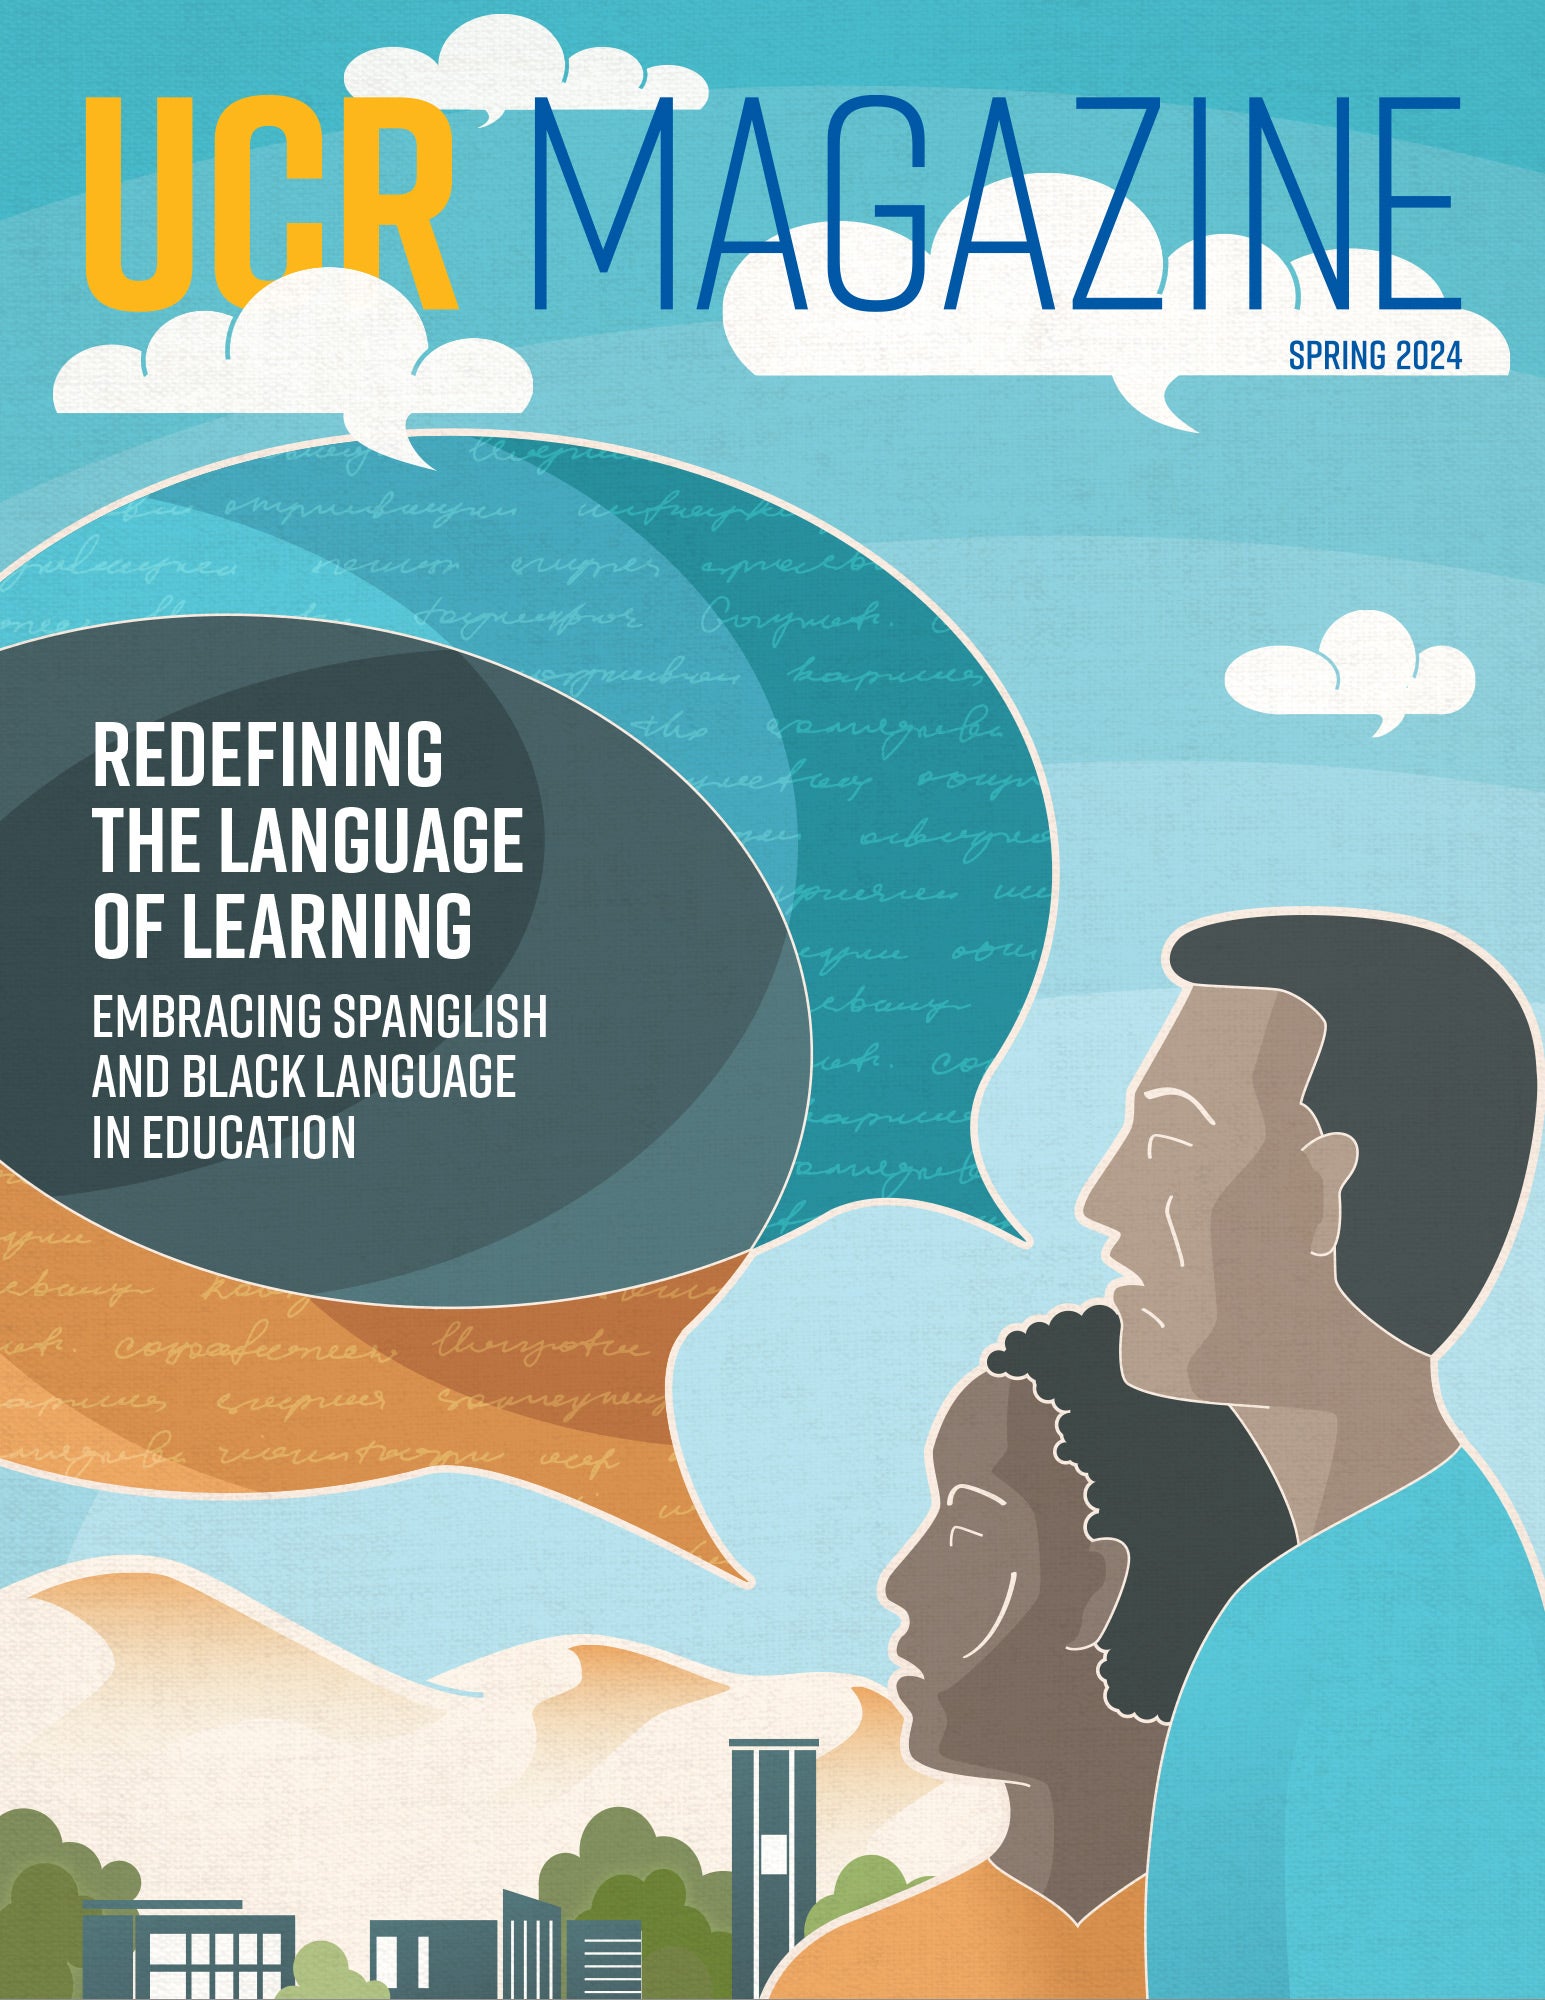 UCR Magazine: Spring 2024